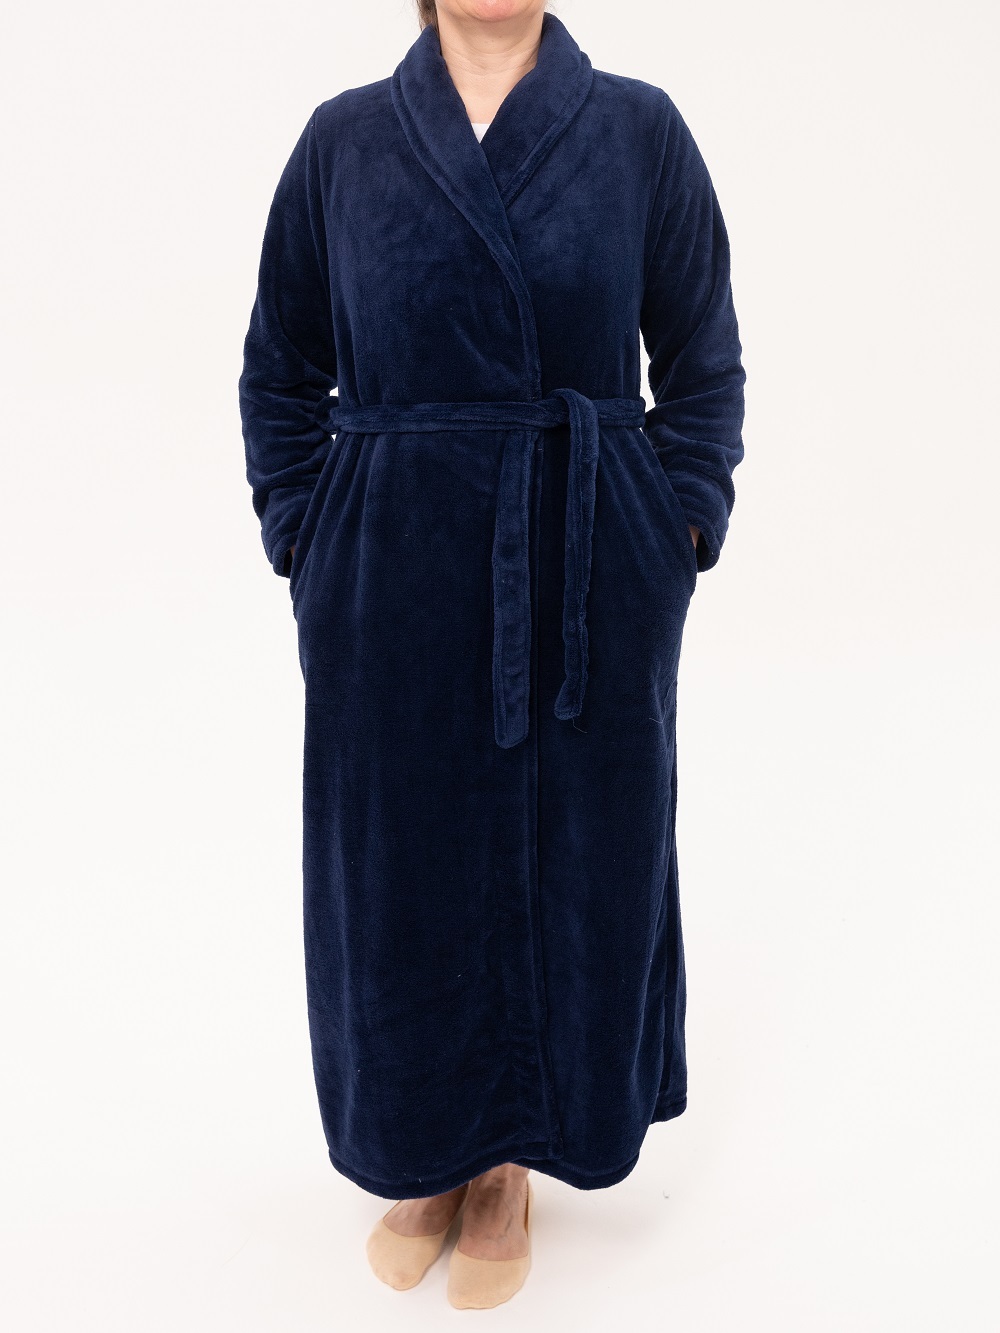 Merino Wool Robe in Full Length – Sandmaiden Sleepwear